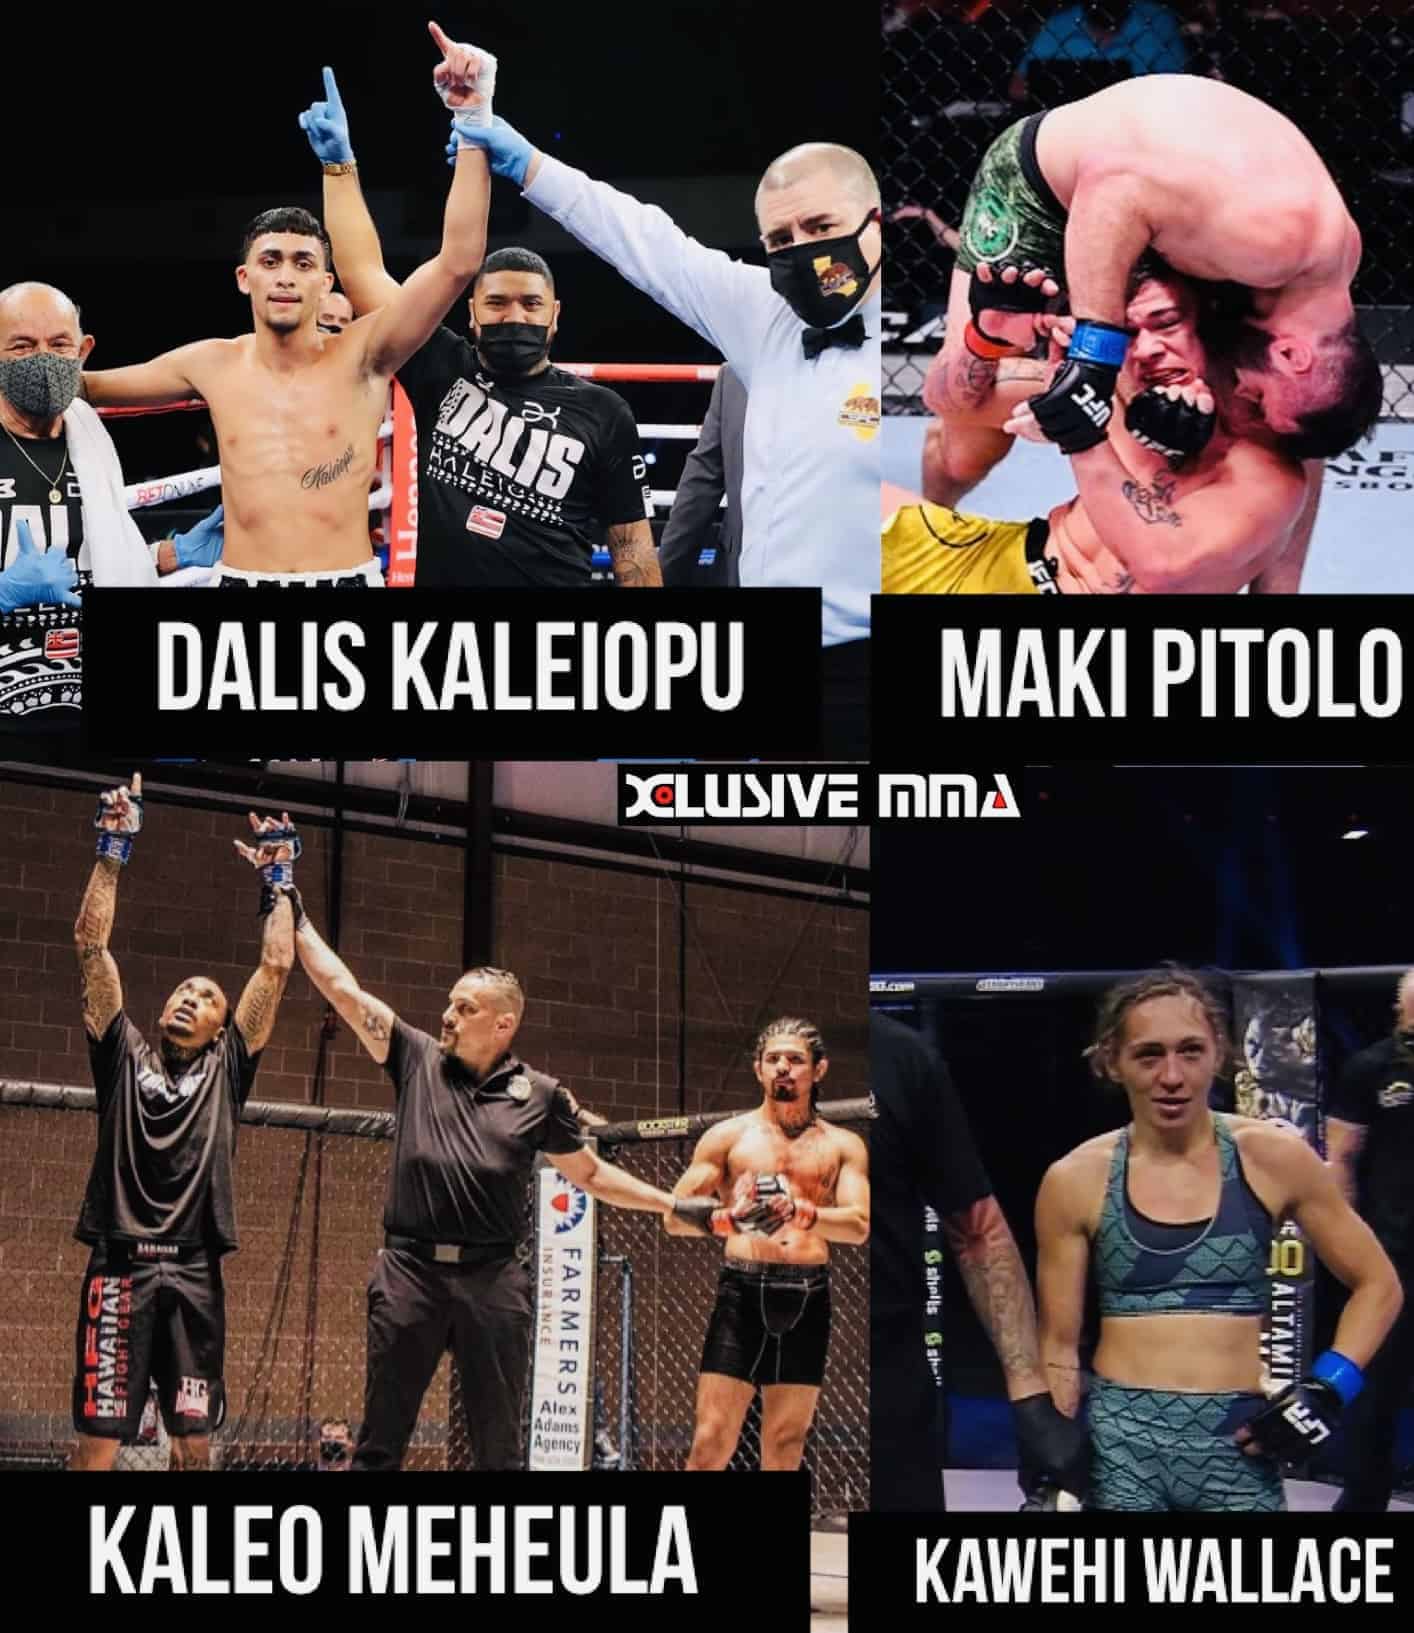 Kawehi Wallace, Dalis Kaleiopu, Maki Pitolo and Kaleo Meheula Fight Results